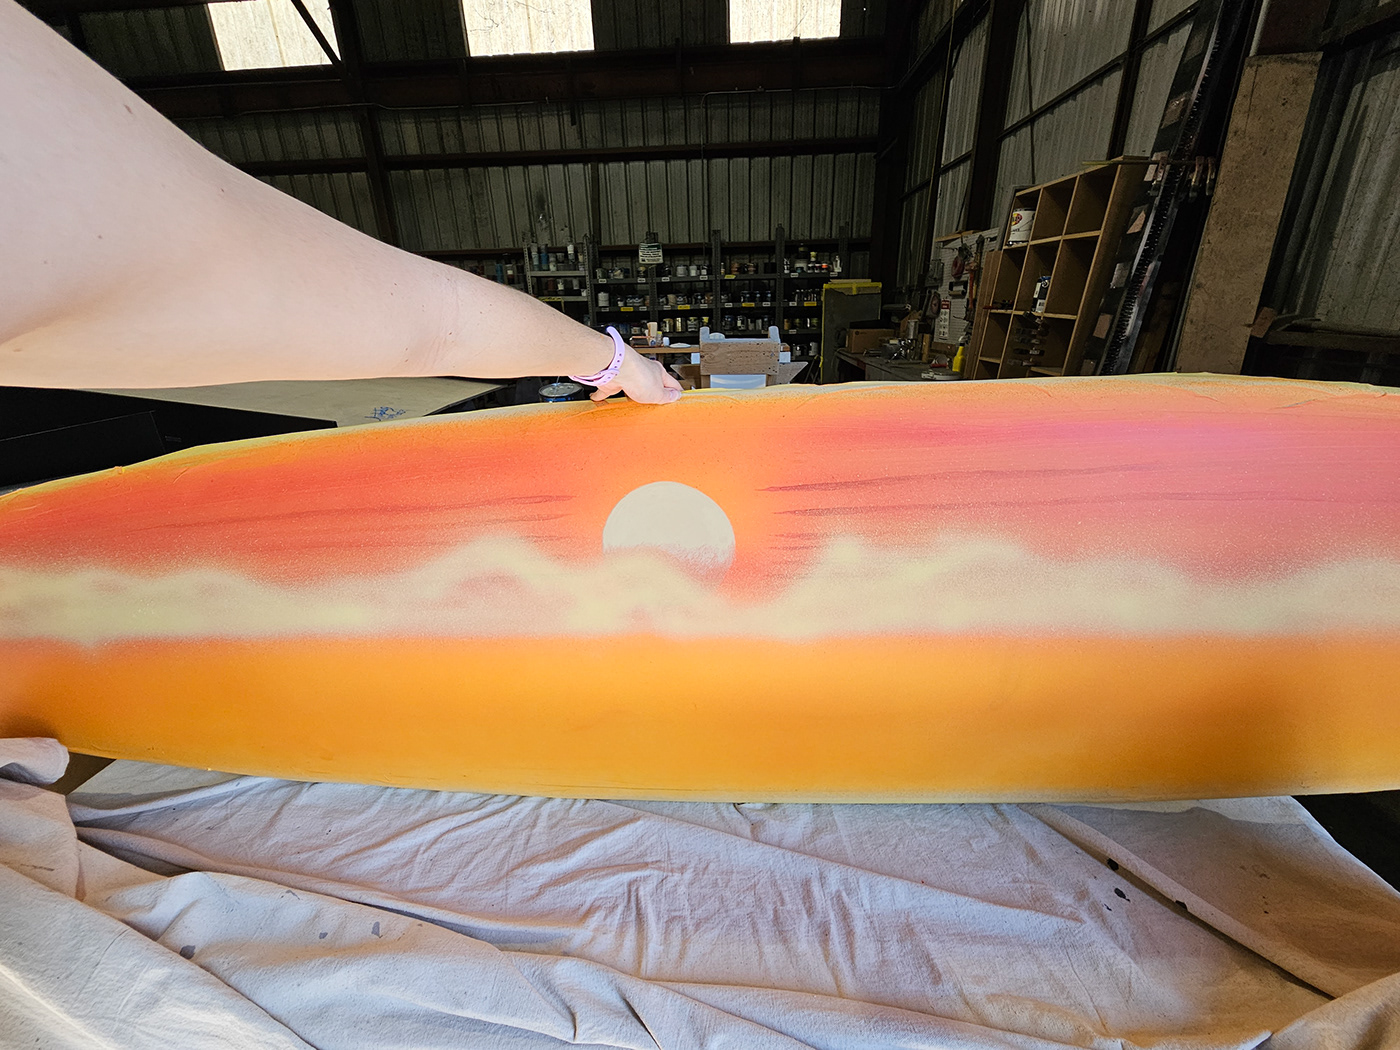 Hand Painted surfboard Custom commission vw bus vw bus illustration Ocean sunset Nature Landscape